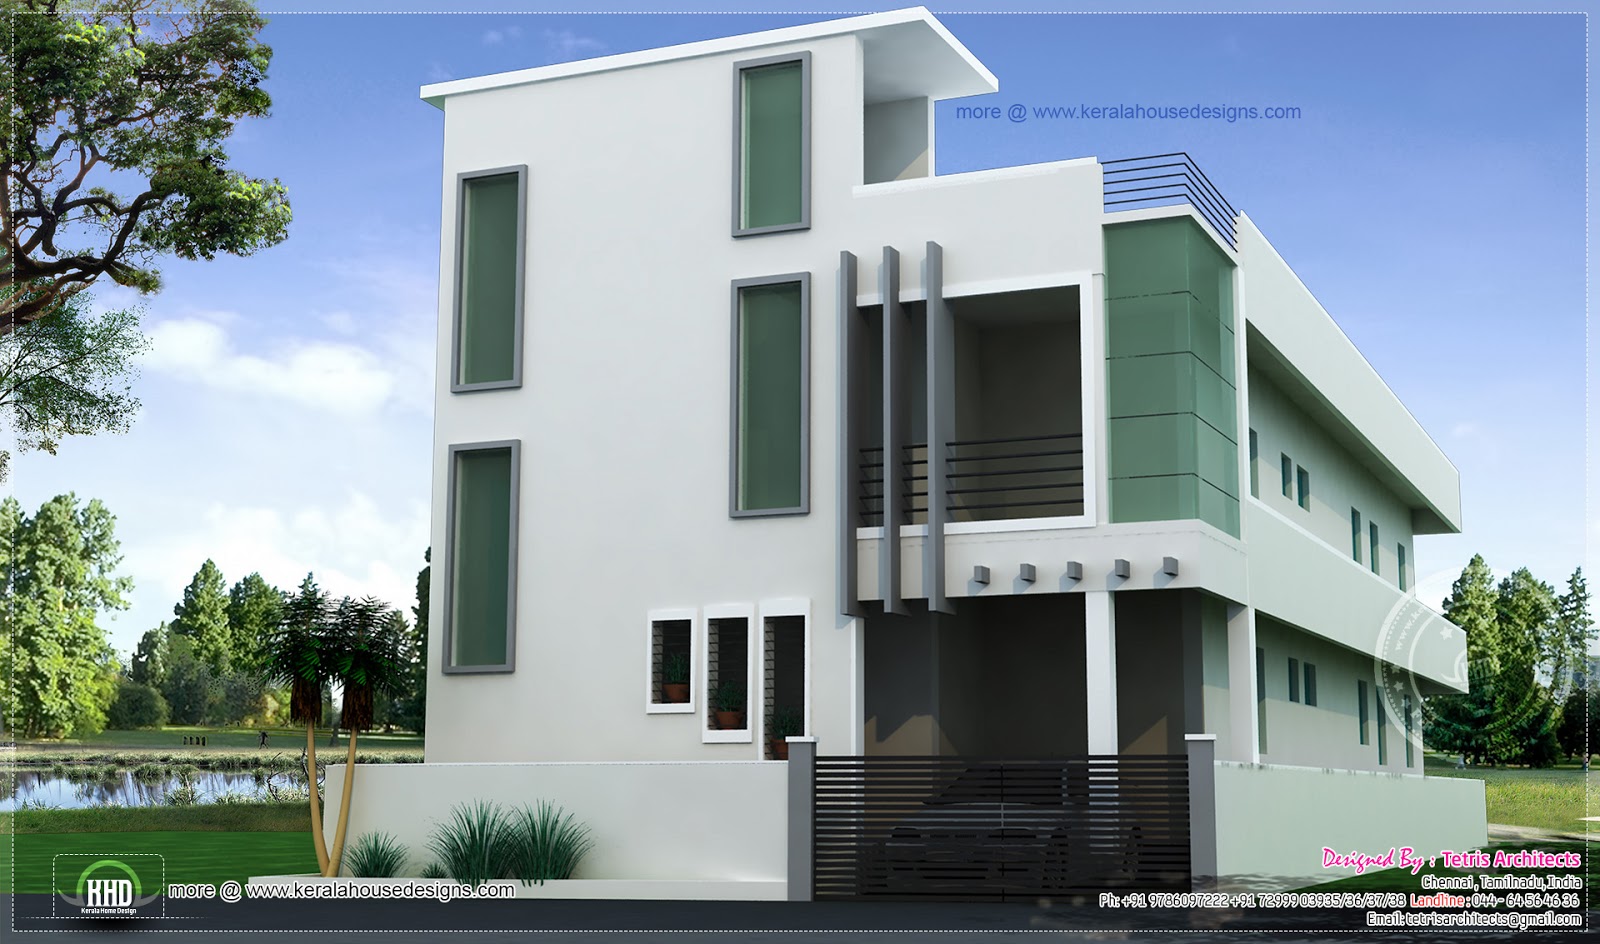 G+1 Residential Structure at Kanchipuram, Tamilnadu ...